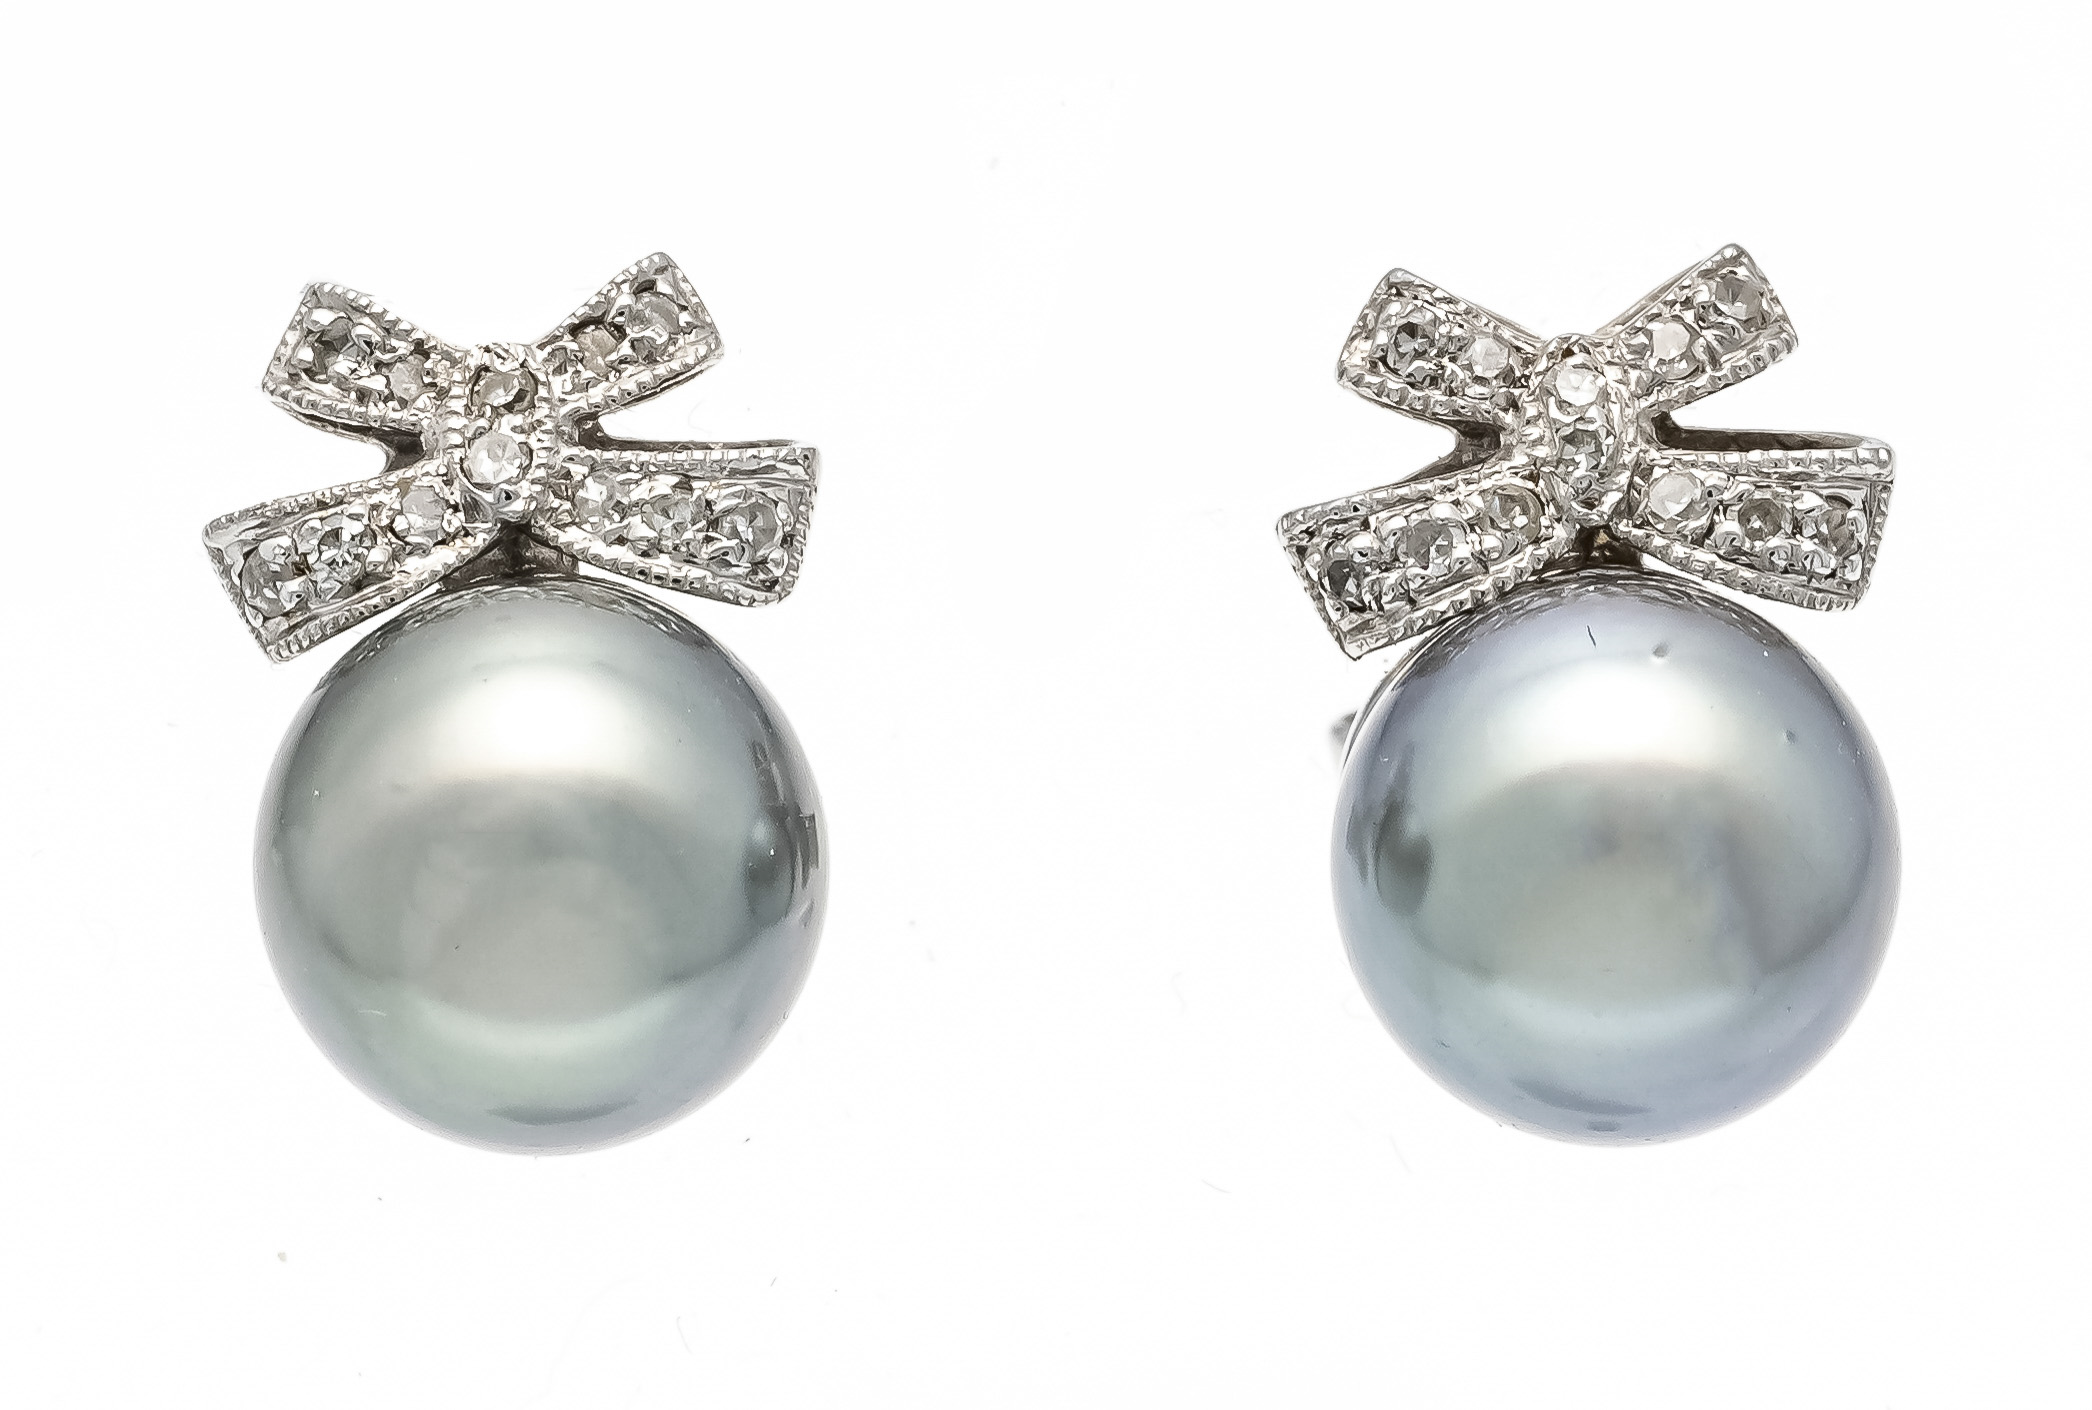 Tahitian pearl diamond stud earrings WG 585/000 with 2 silver-coloured Tahitian pearls 9 mm with